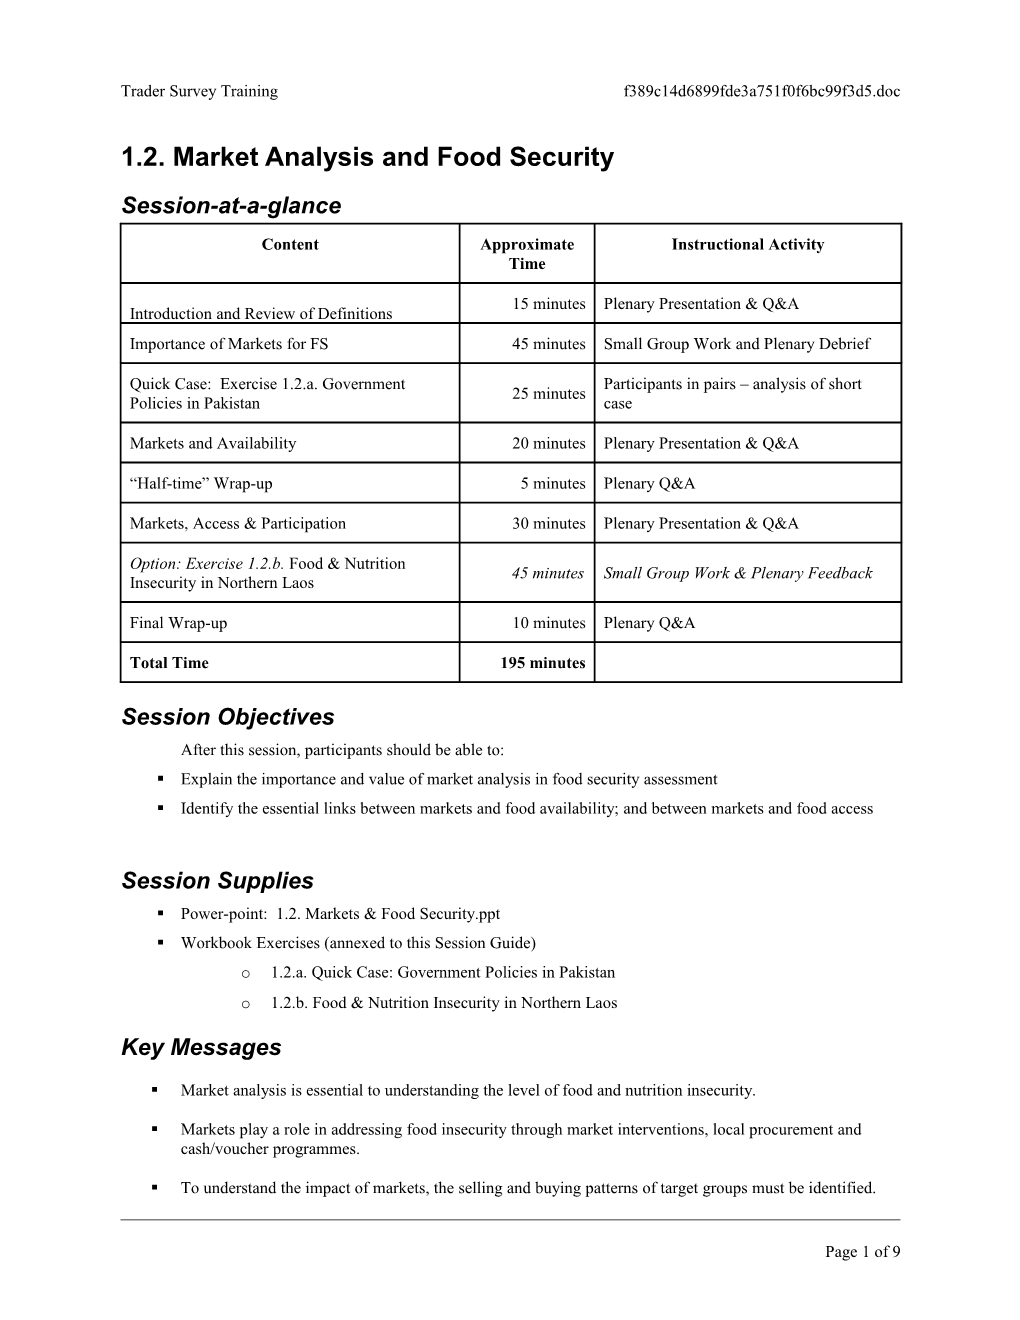 Trader Survey Training 1.2. SG - Market Analysis & Food Security